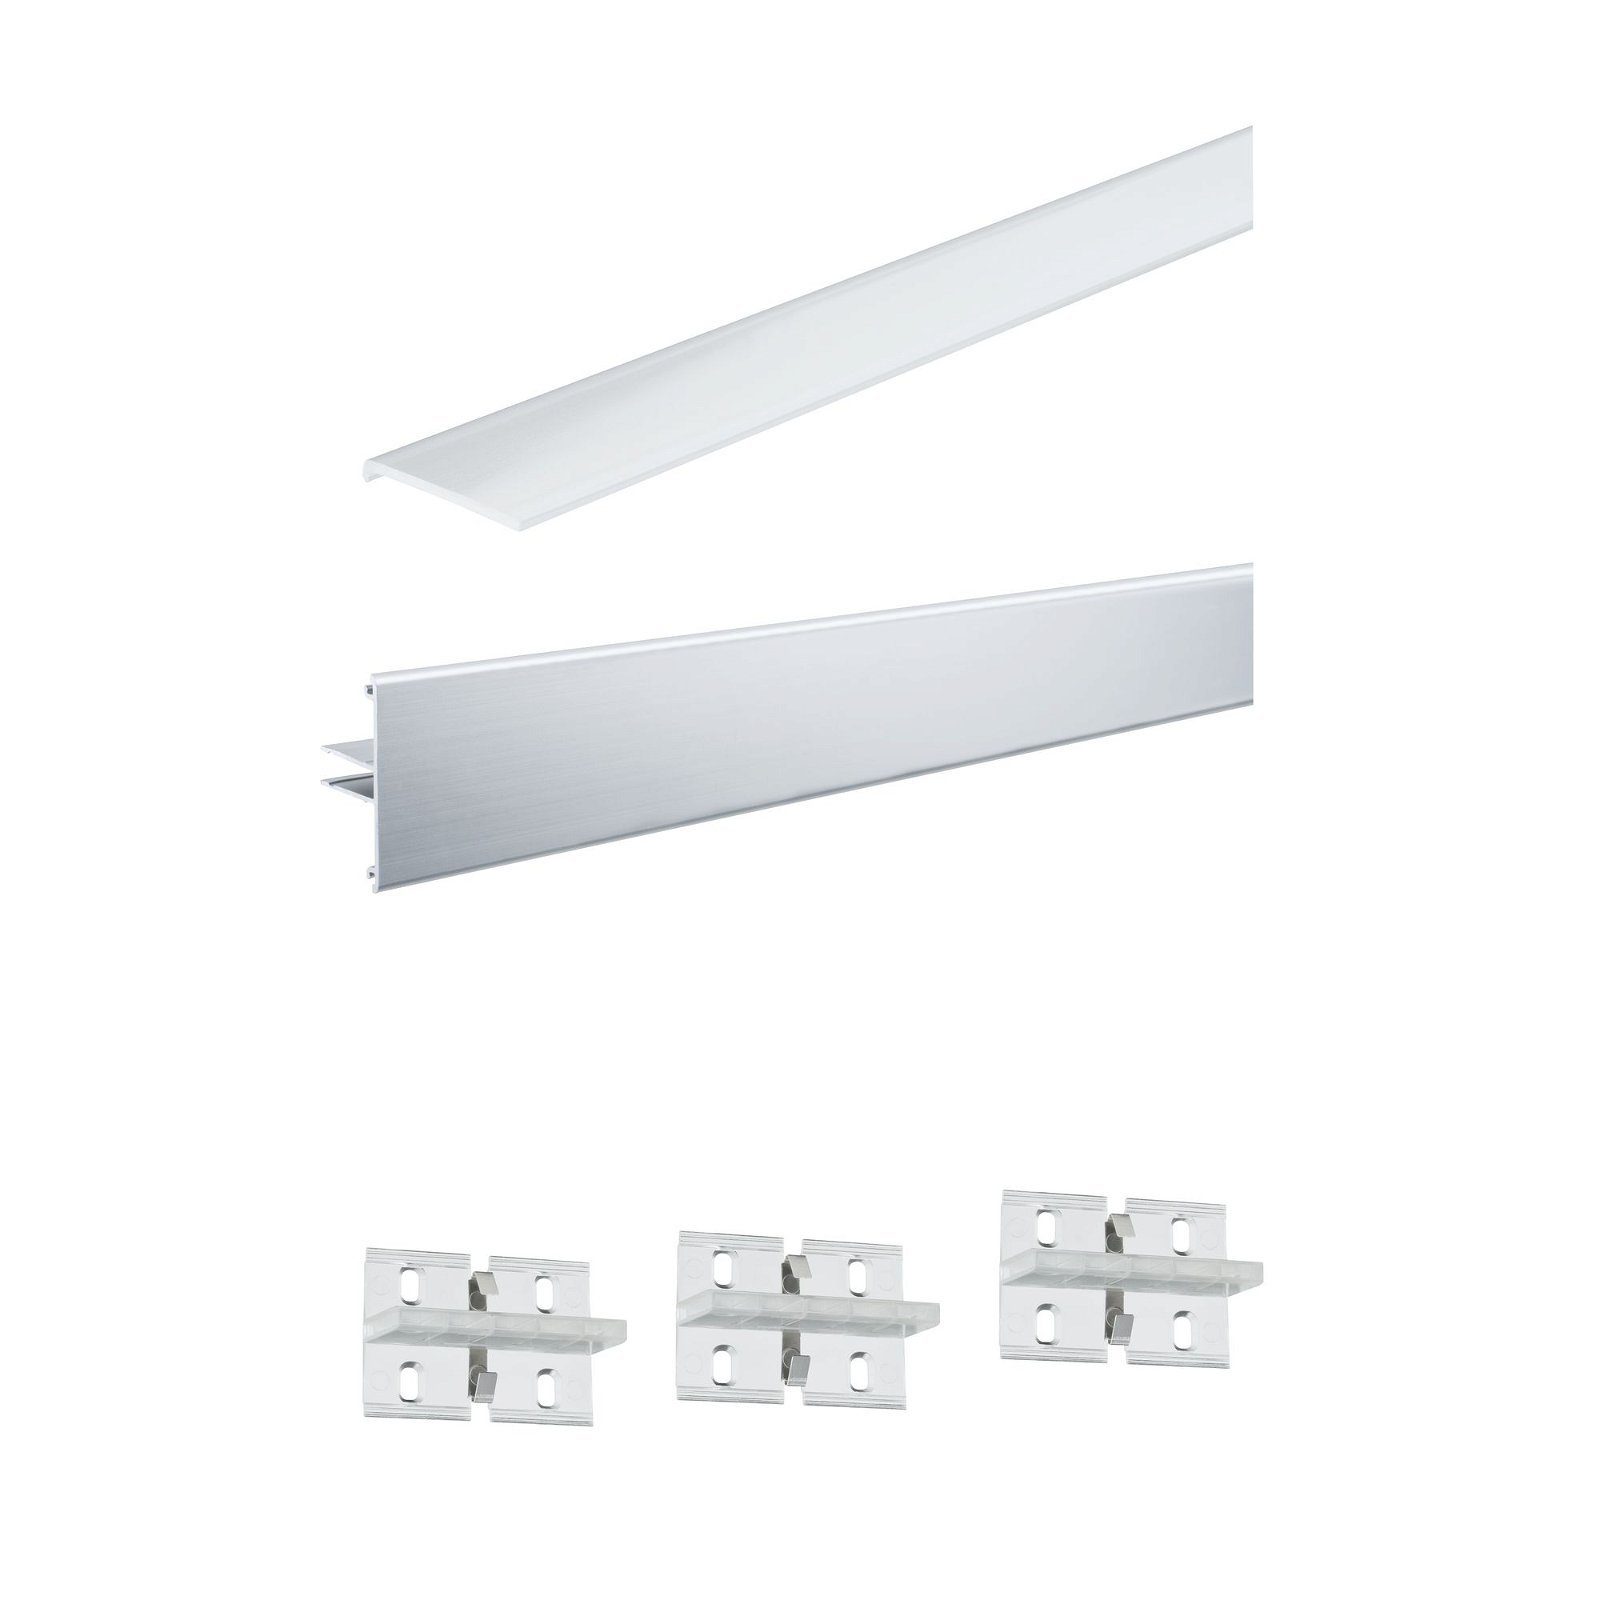 Paulmann LED-Stripe-Profil Function Duo Profil Set 200cm inkl 3 Clips + Diffusor  Alu eloxiert, Nicht vergessen: Passende LED-Strips gleich mitbestellen! | LED-Stripes